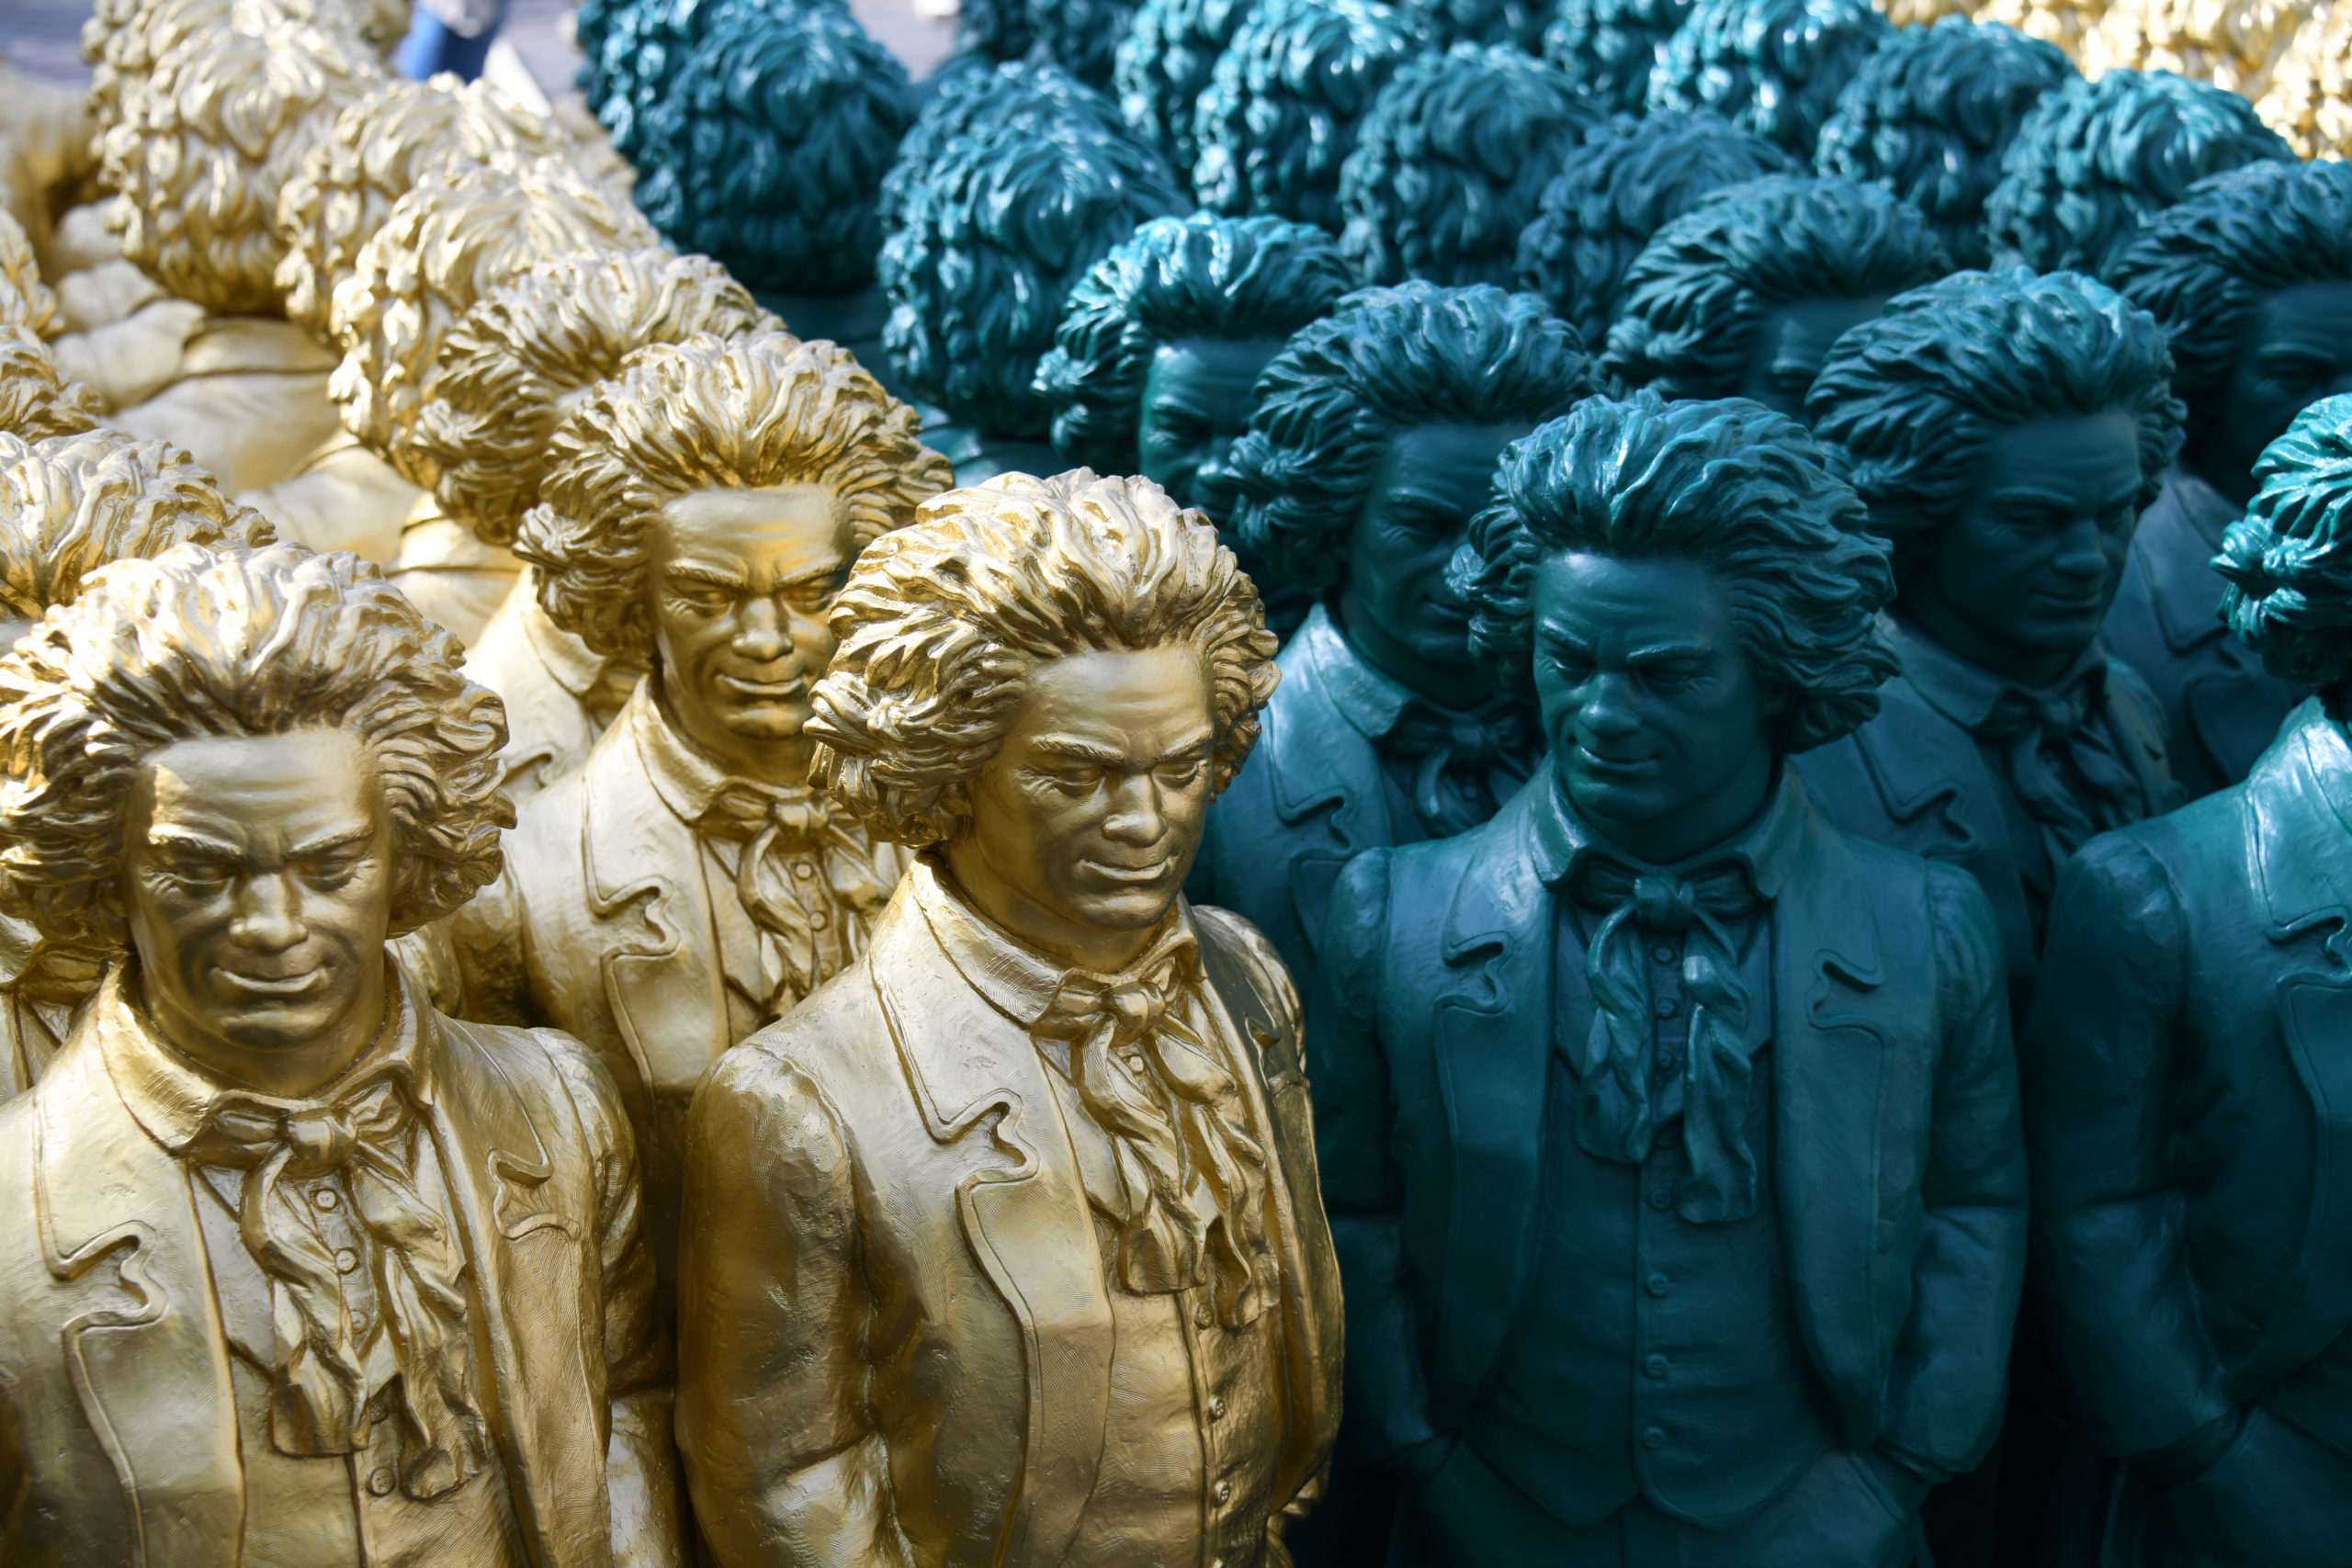 Beethoven sculptures by artist Ottmar Hoerl in Bonn, Germany